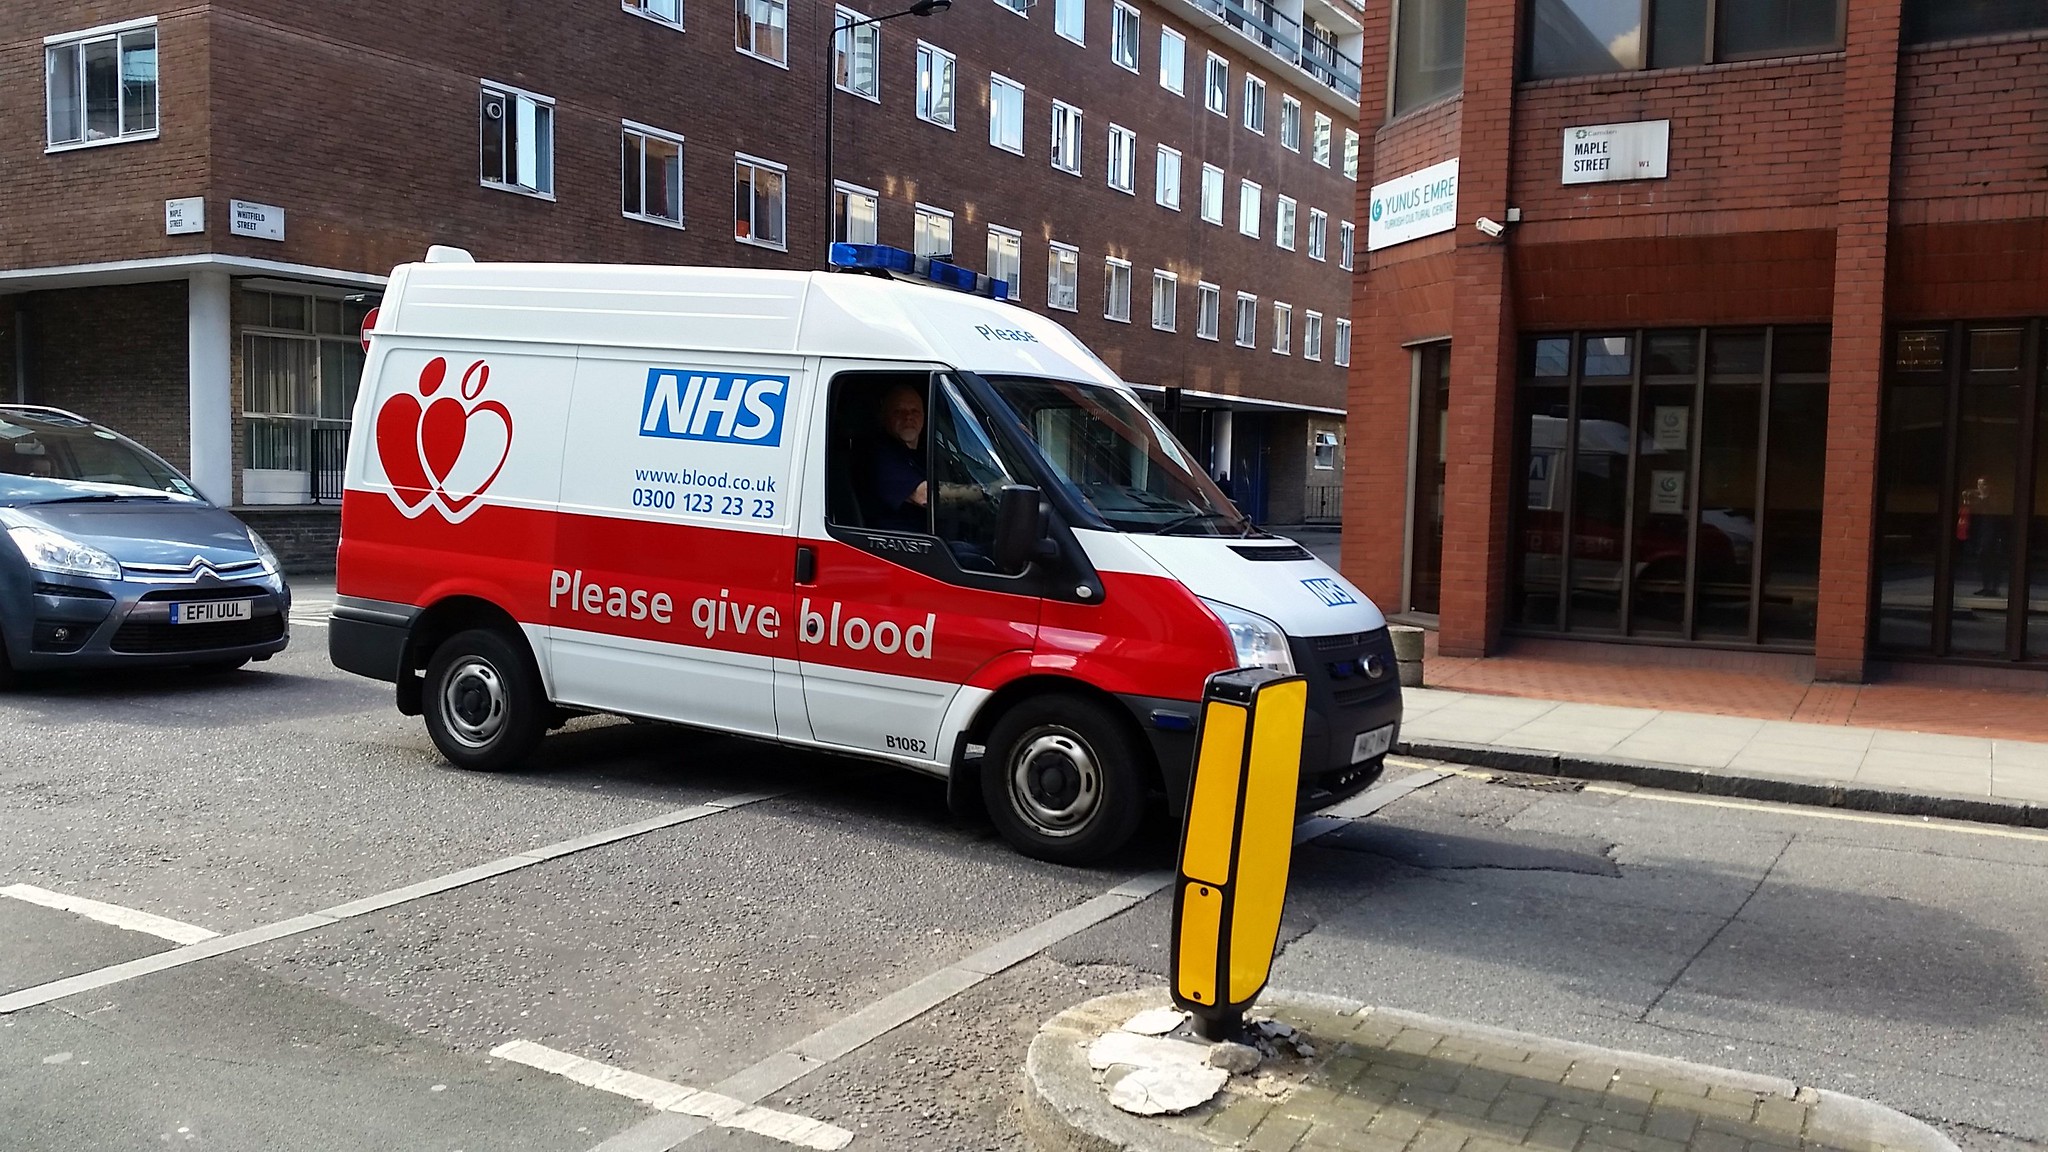 NHS Blood Donation Van Driving On Street